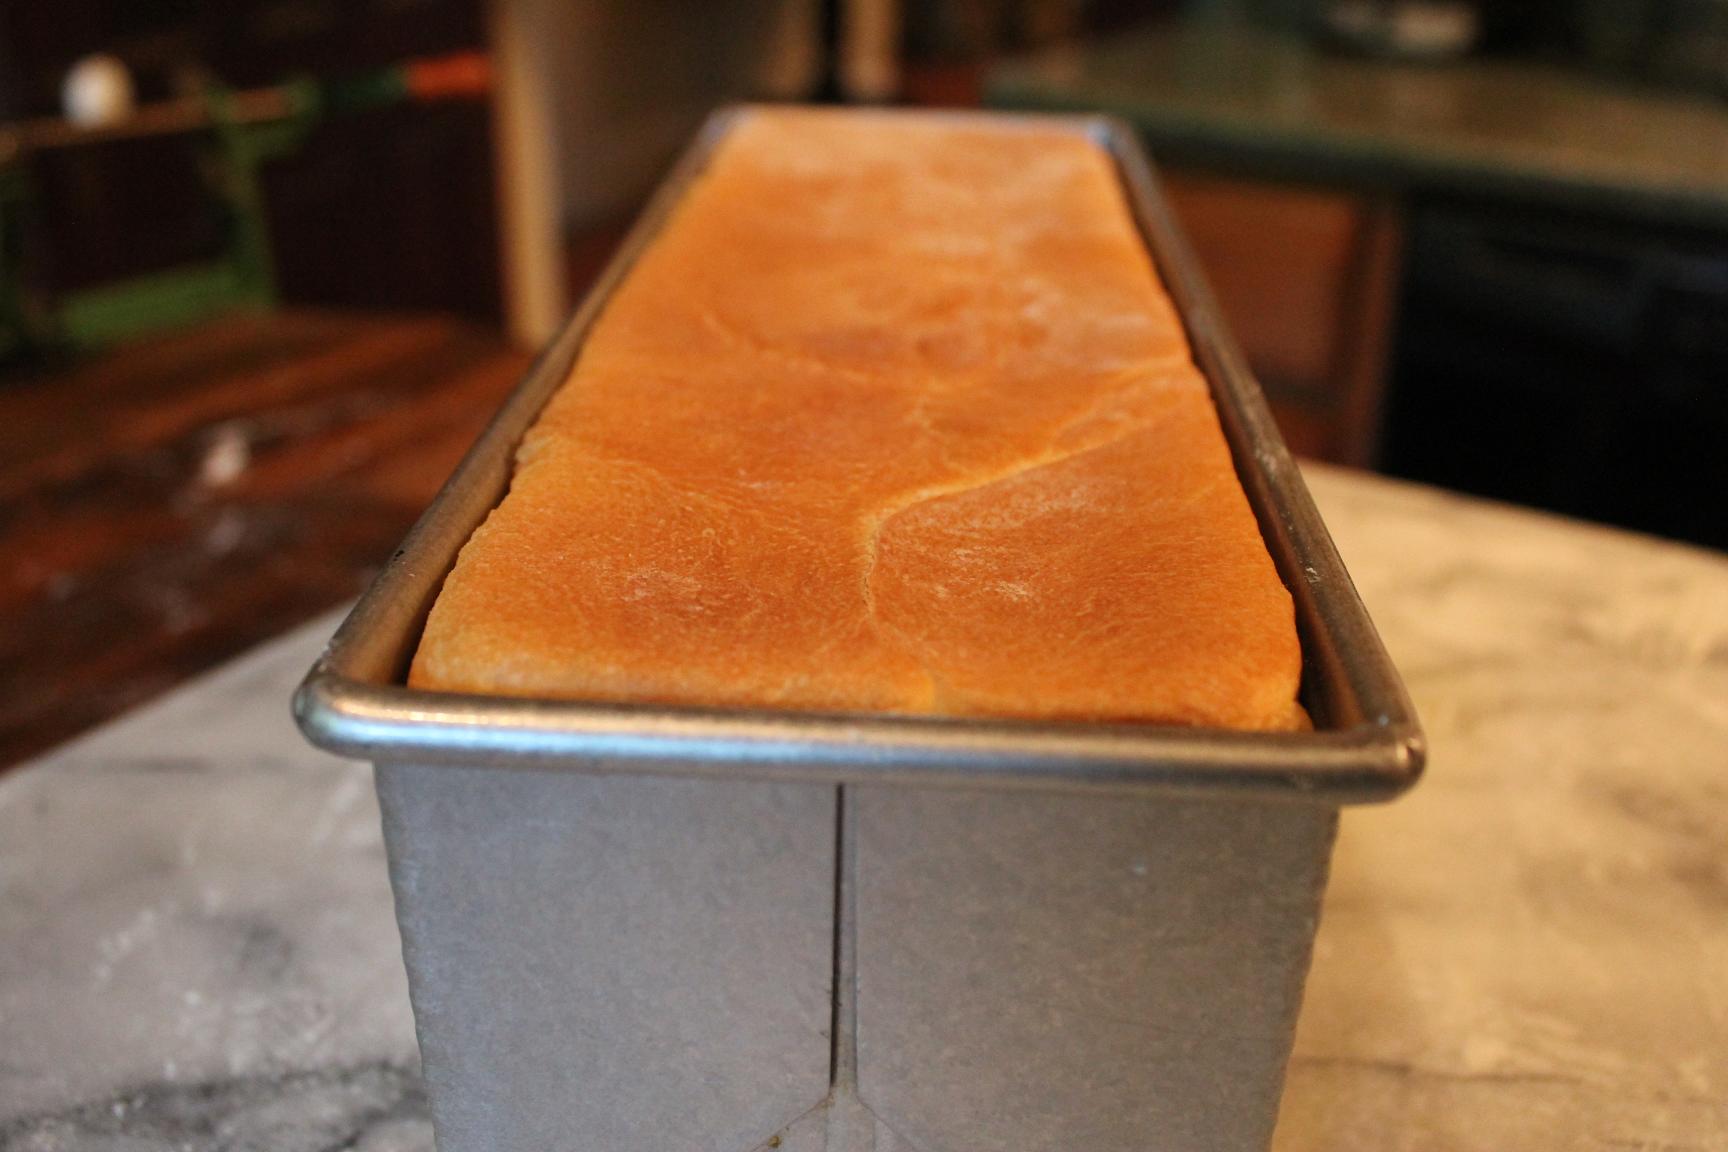 Pana Baking Scale – KitchenSupply